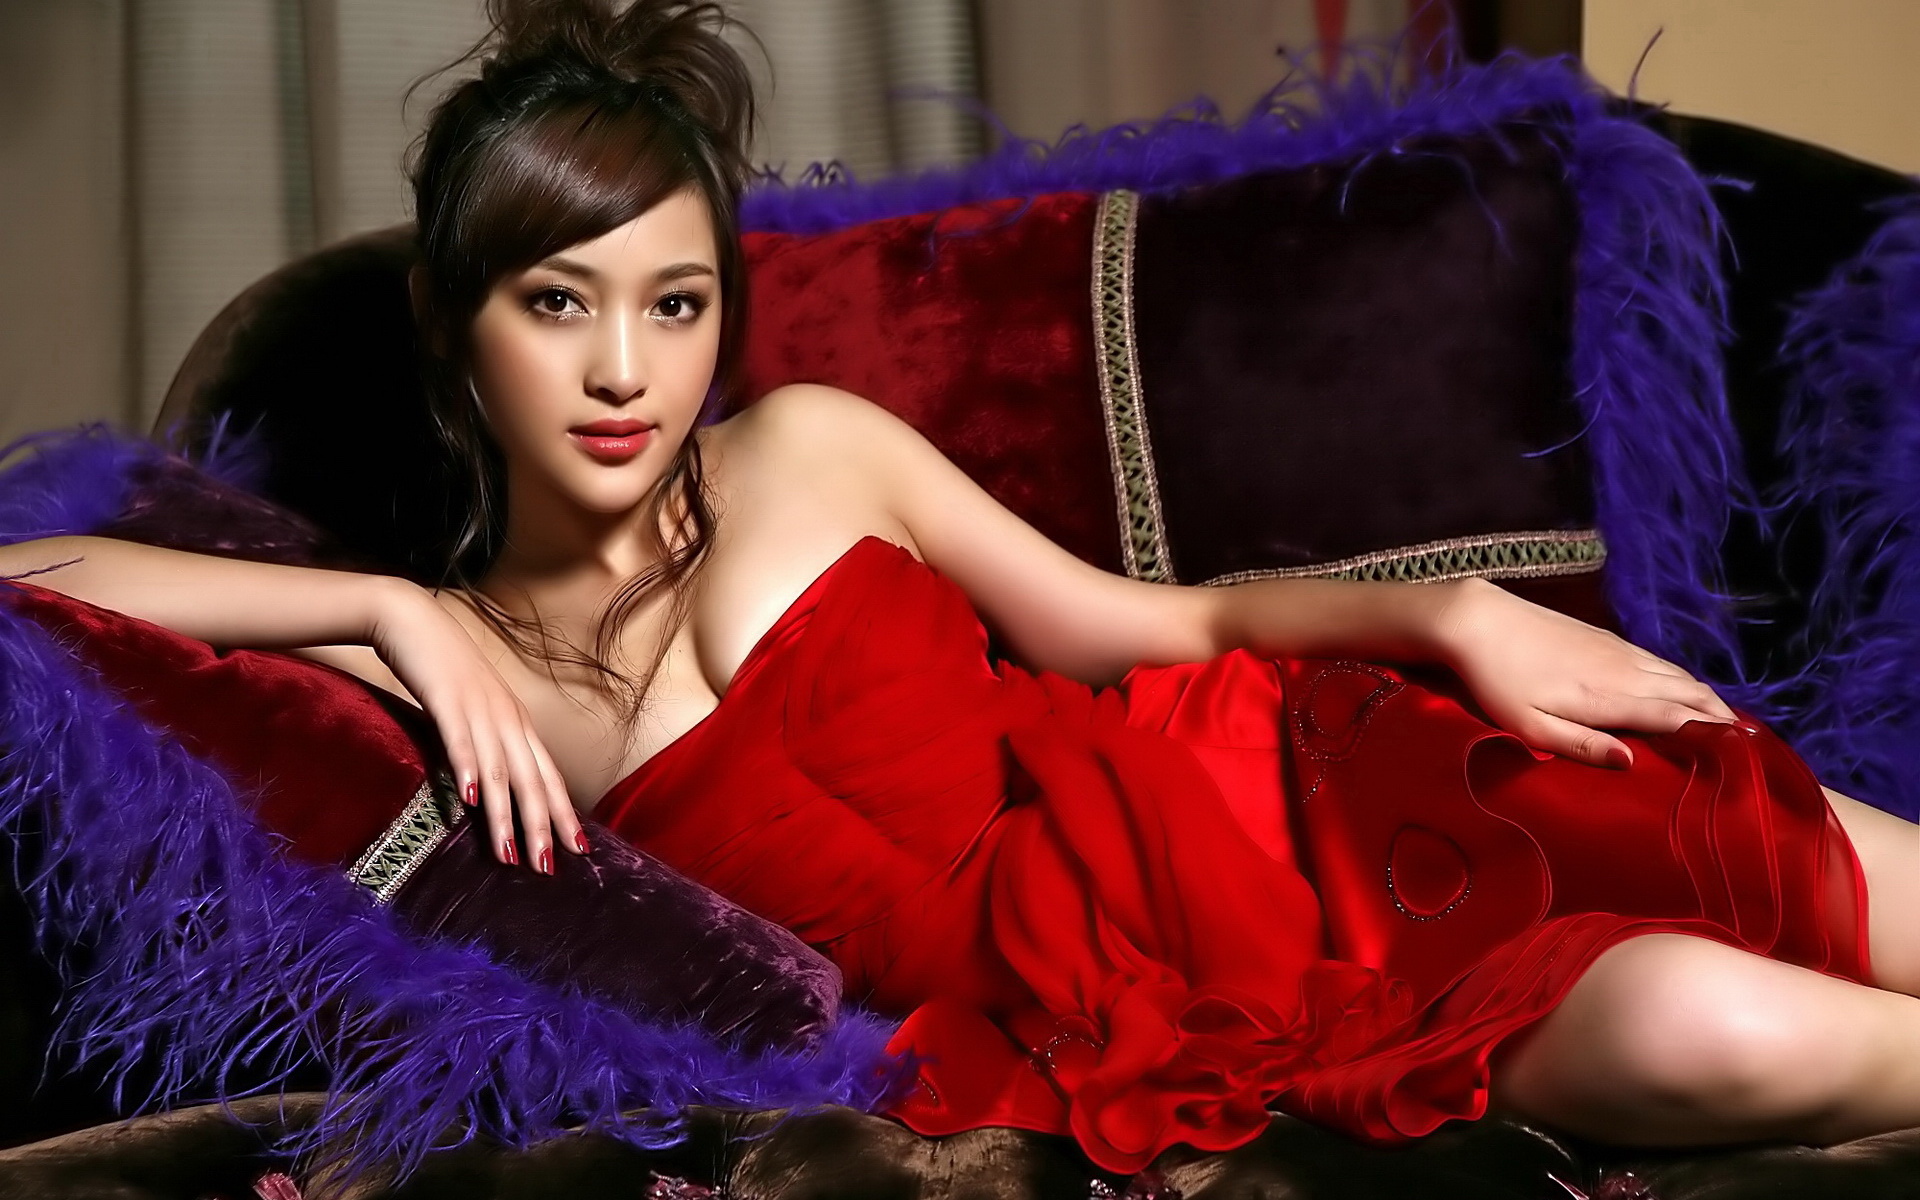 Cute Asian Girl in Red Dress widescreen wallpaper | Wide-Wallpapers.NET